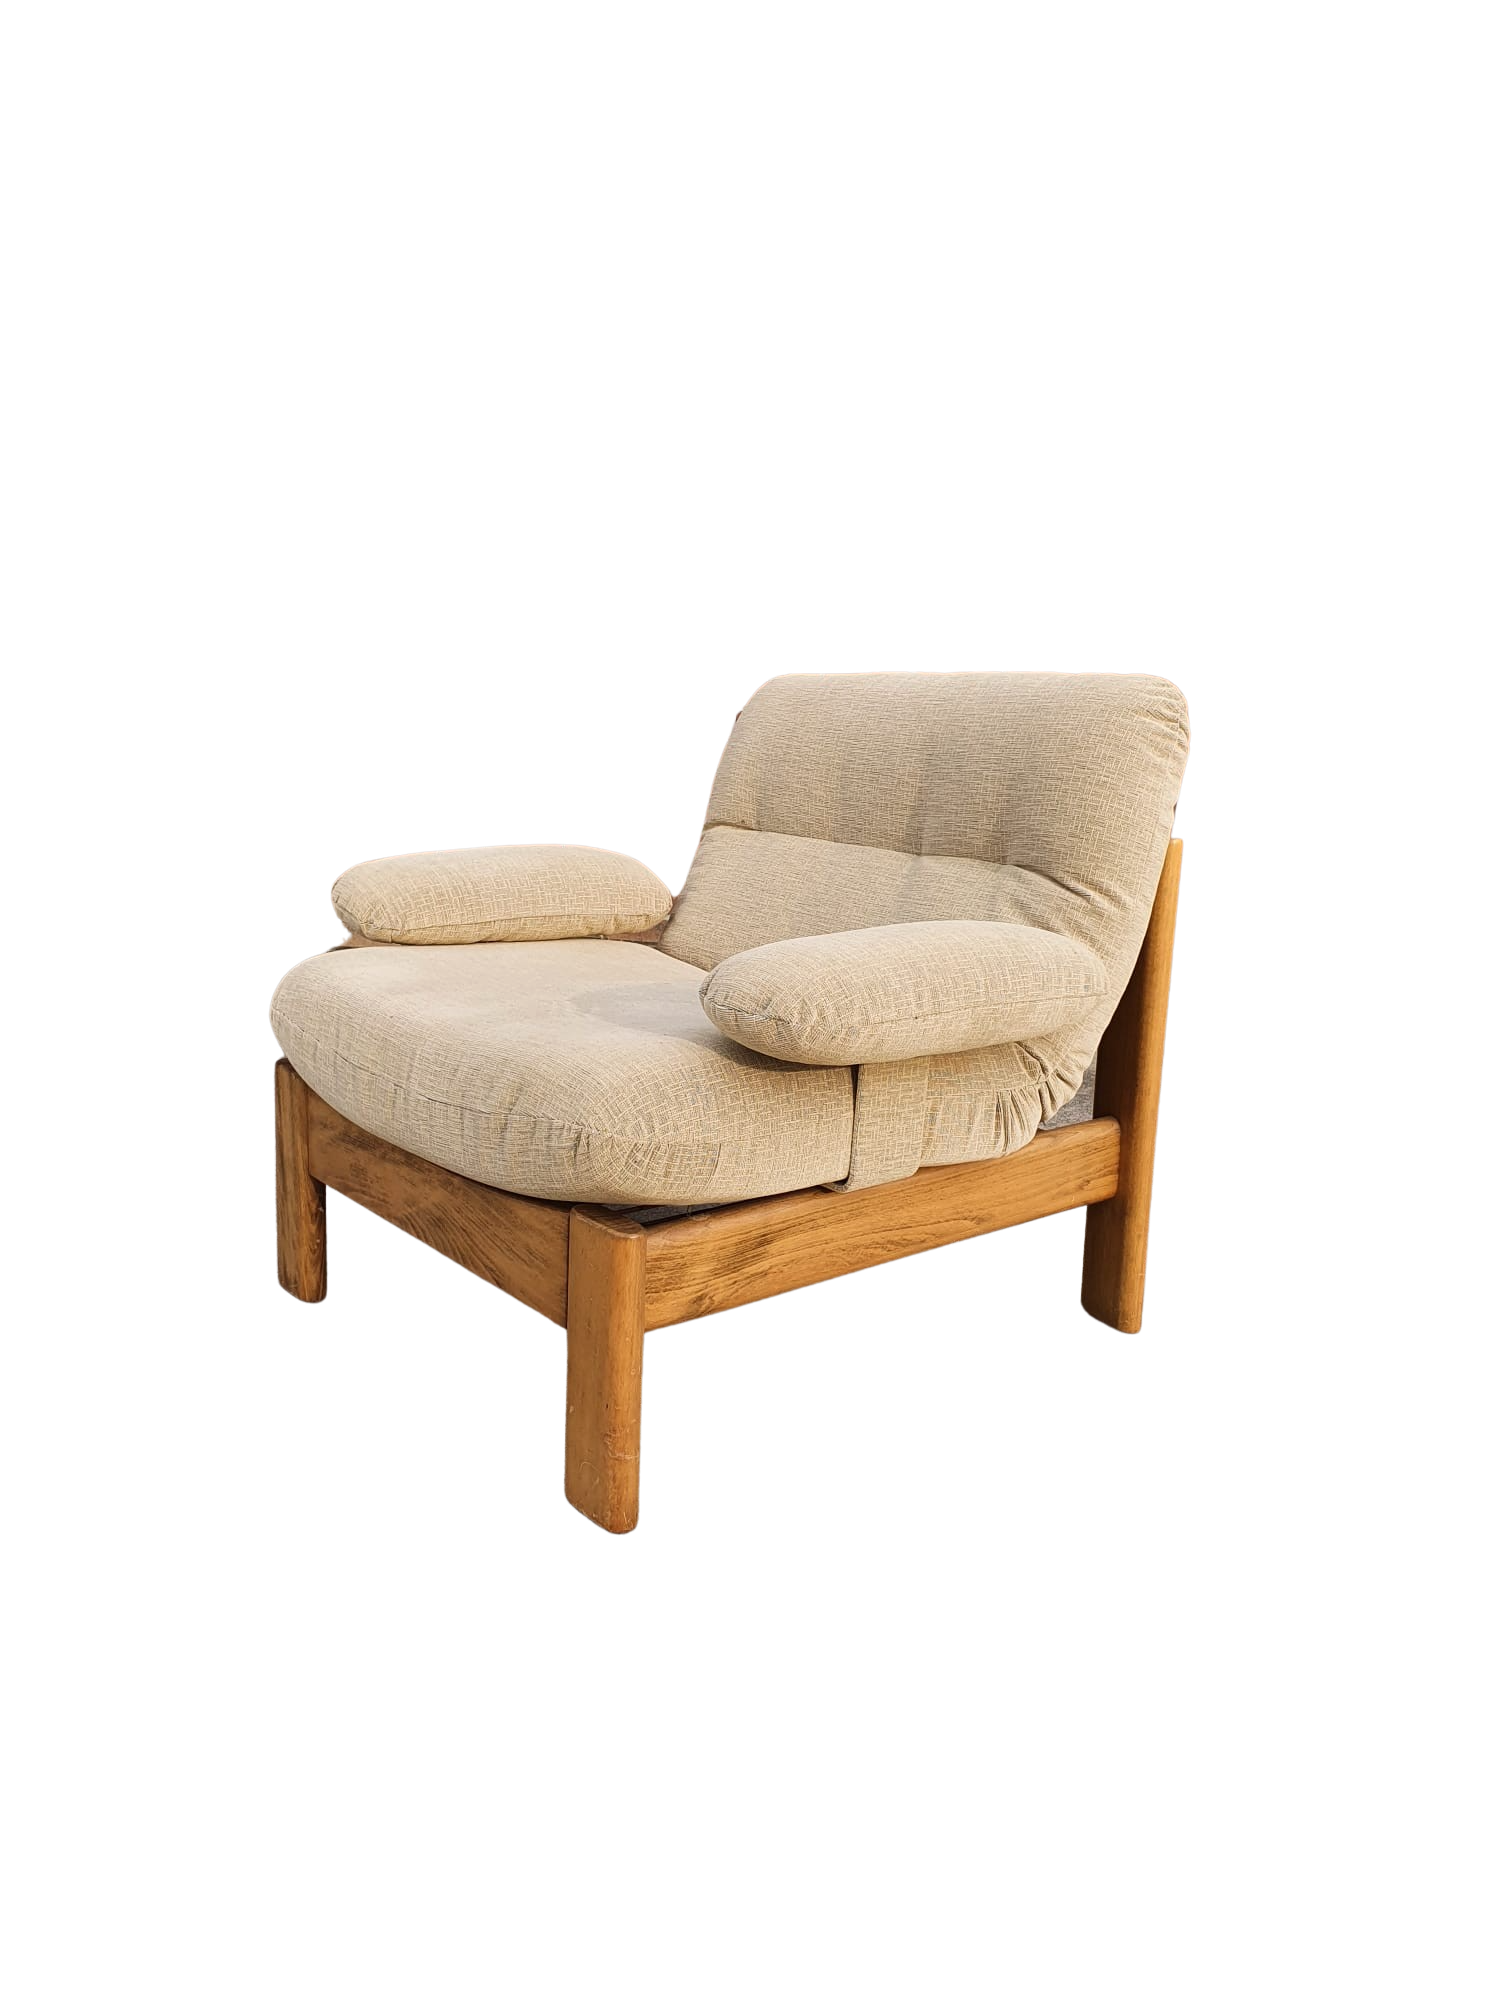 2 x vintage lounge chair fauteuil 1970.